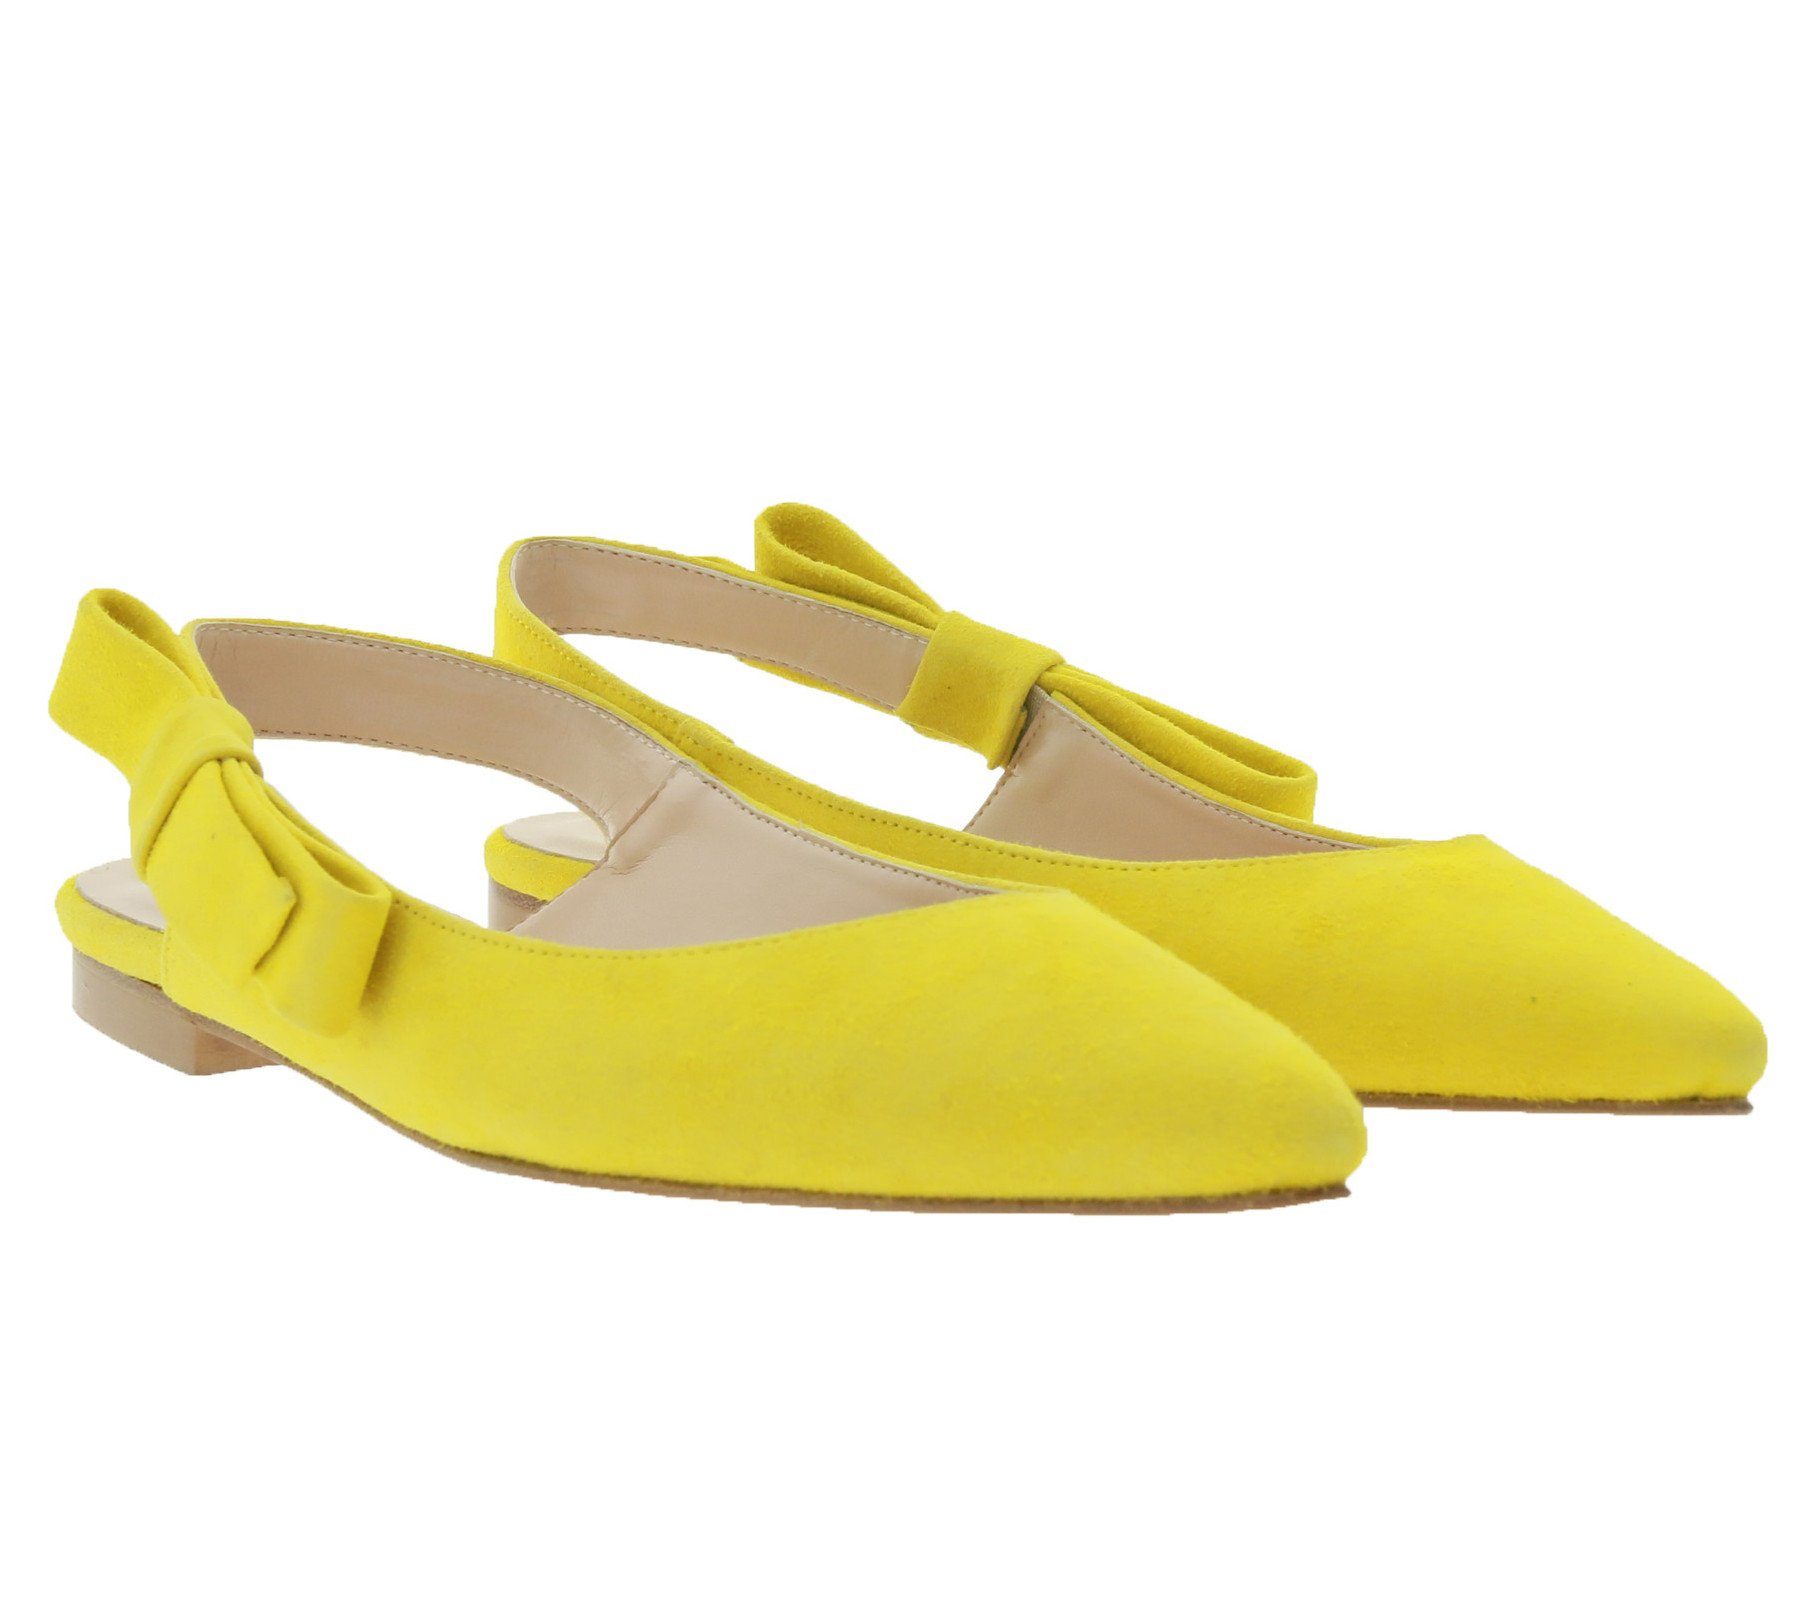 BiancaDi »Bianca Di Sling-Pumps komfortable Damen Veloursleder Absatz-Schuhe  Made in Italy Slipper Gelb« Slingpumps online kaufen | OTTO